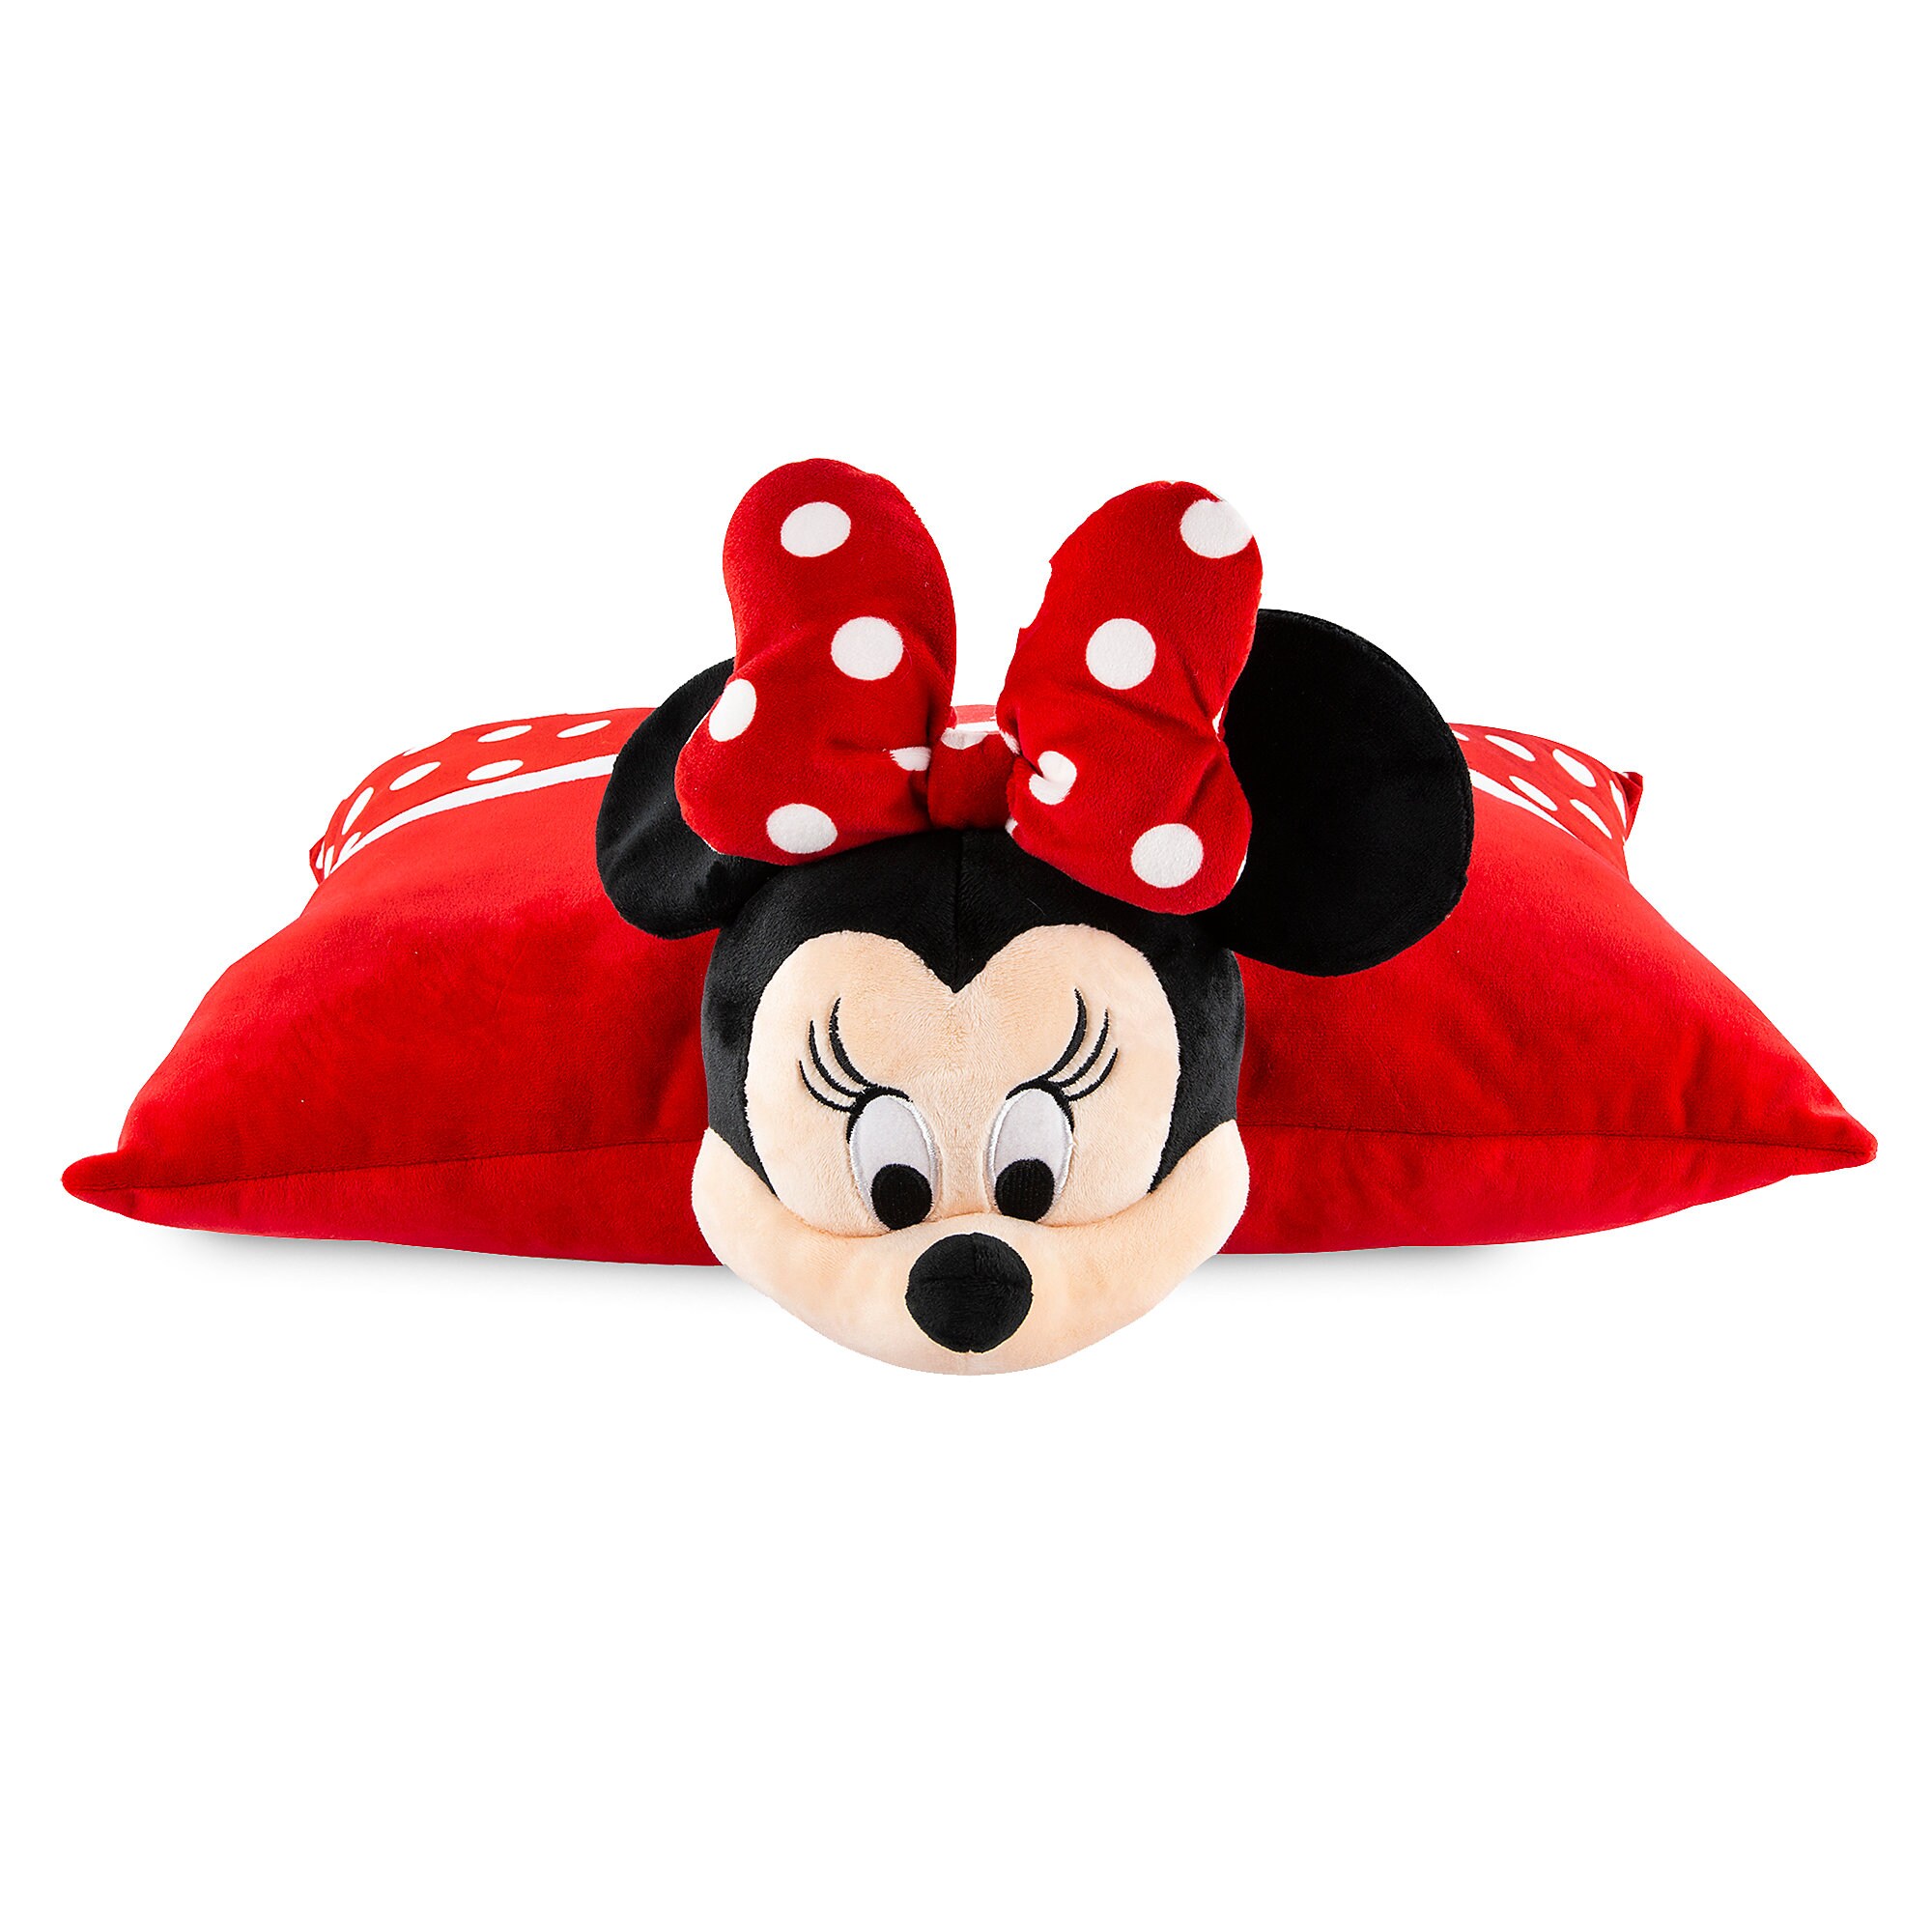 Minnie Mouse Plush Pillow